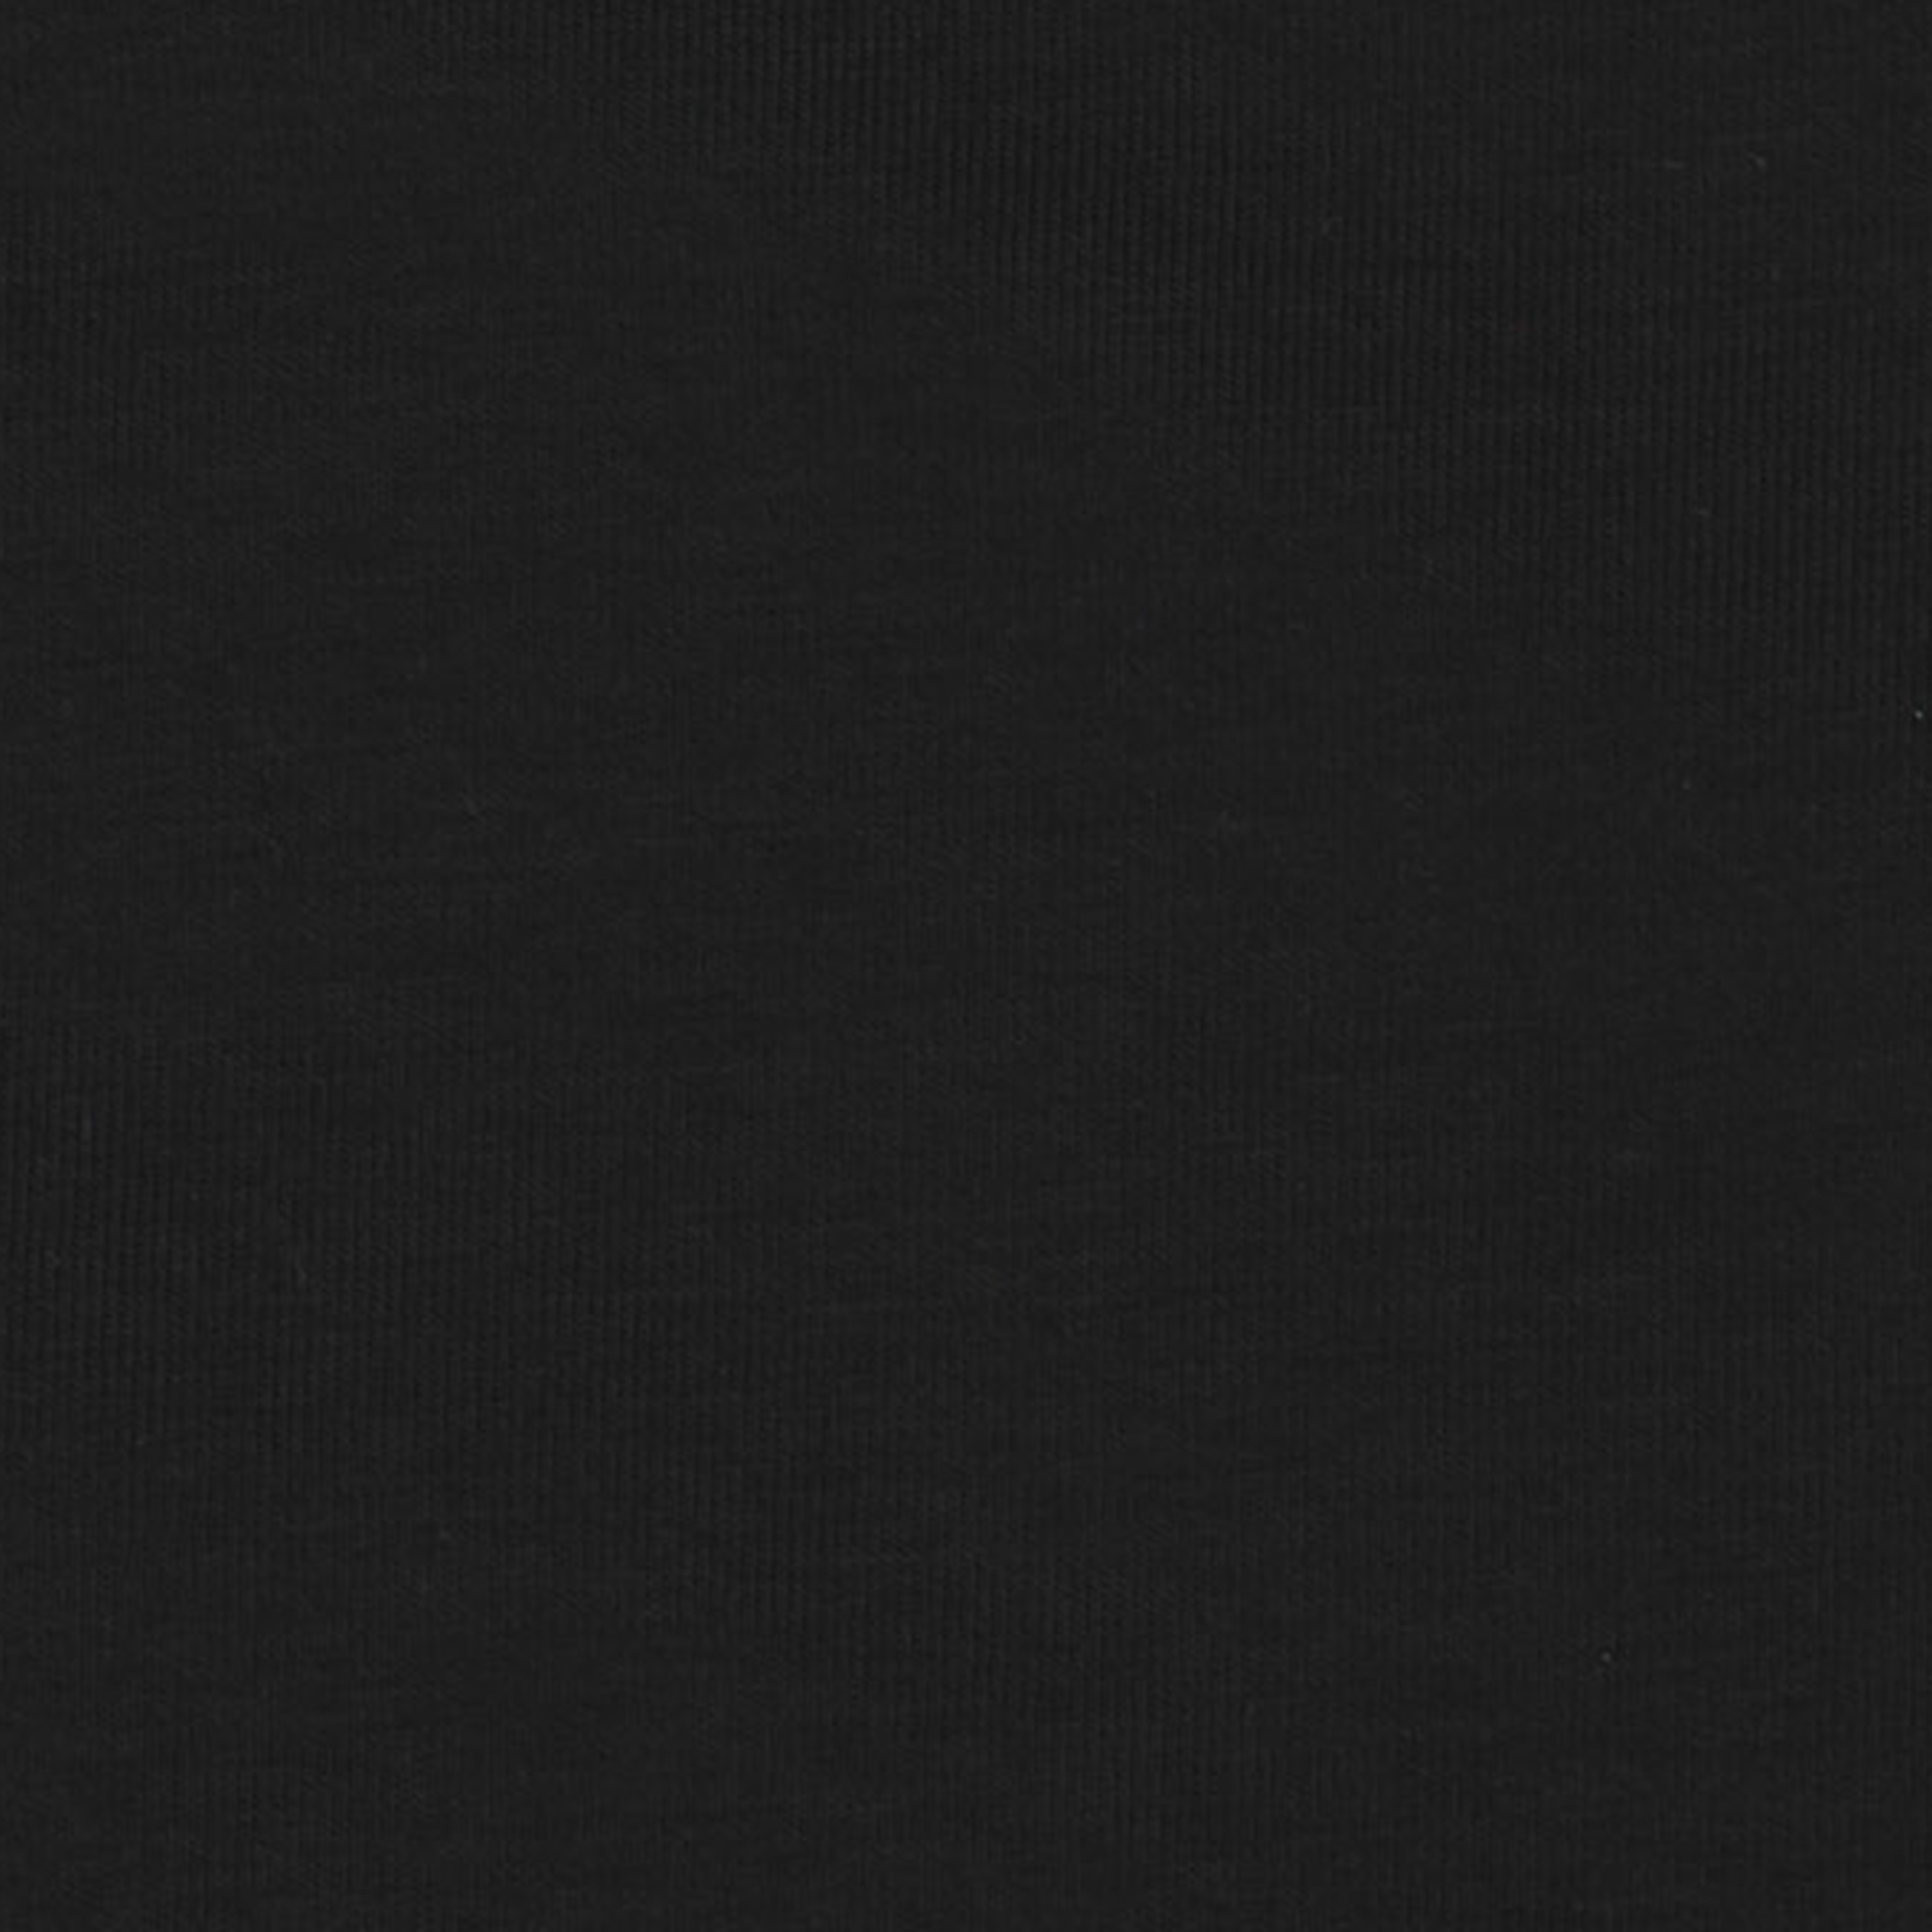 Мужская футболка Pantelemone MF-914 54 черная, цвет черный, размер 54 - фото 3